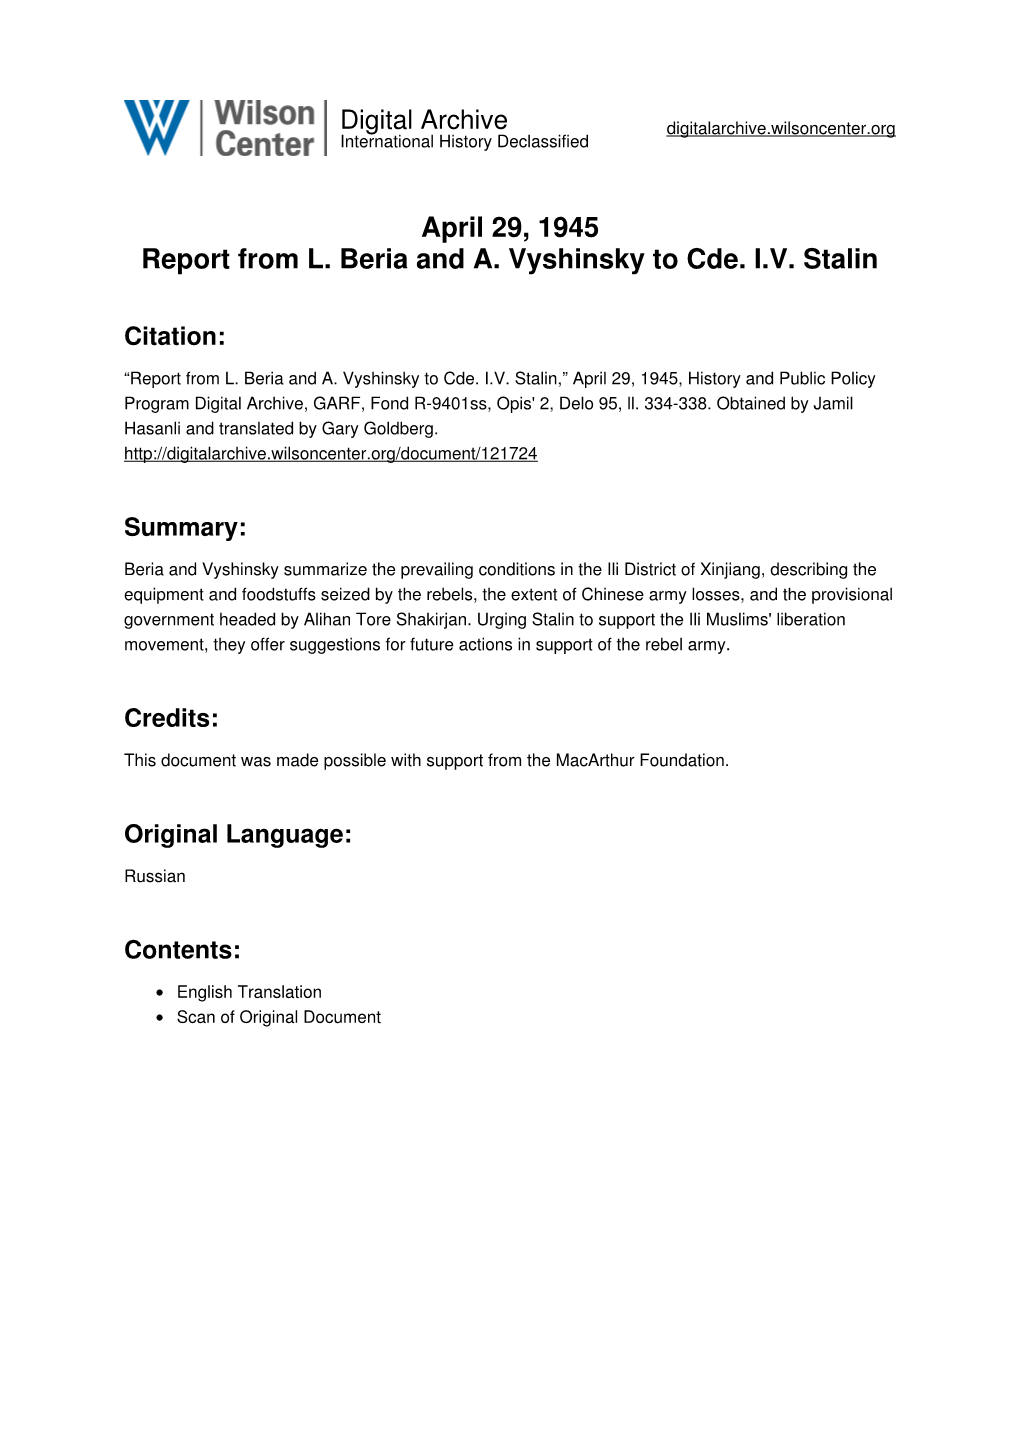 April 29, 1945 Report from L. Beria and A. Vyshinsky to Cde. I.V. Stalin